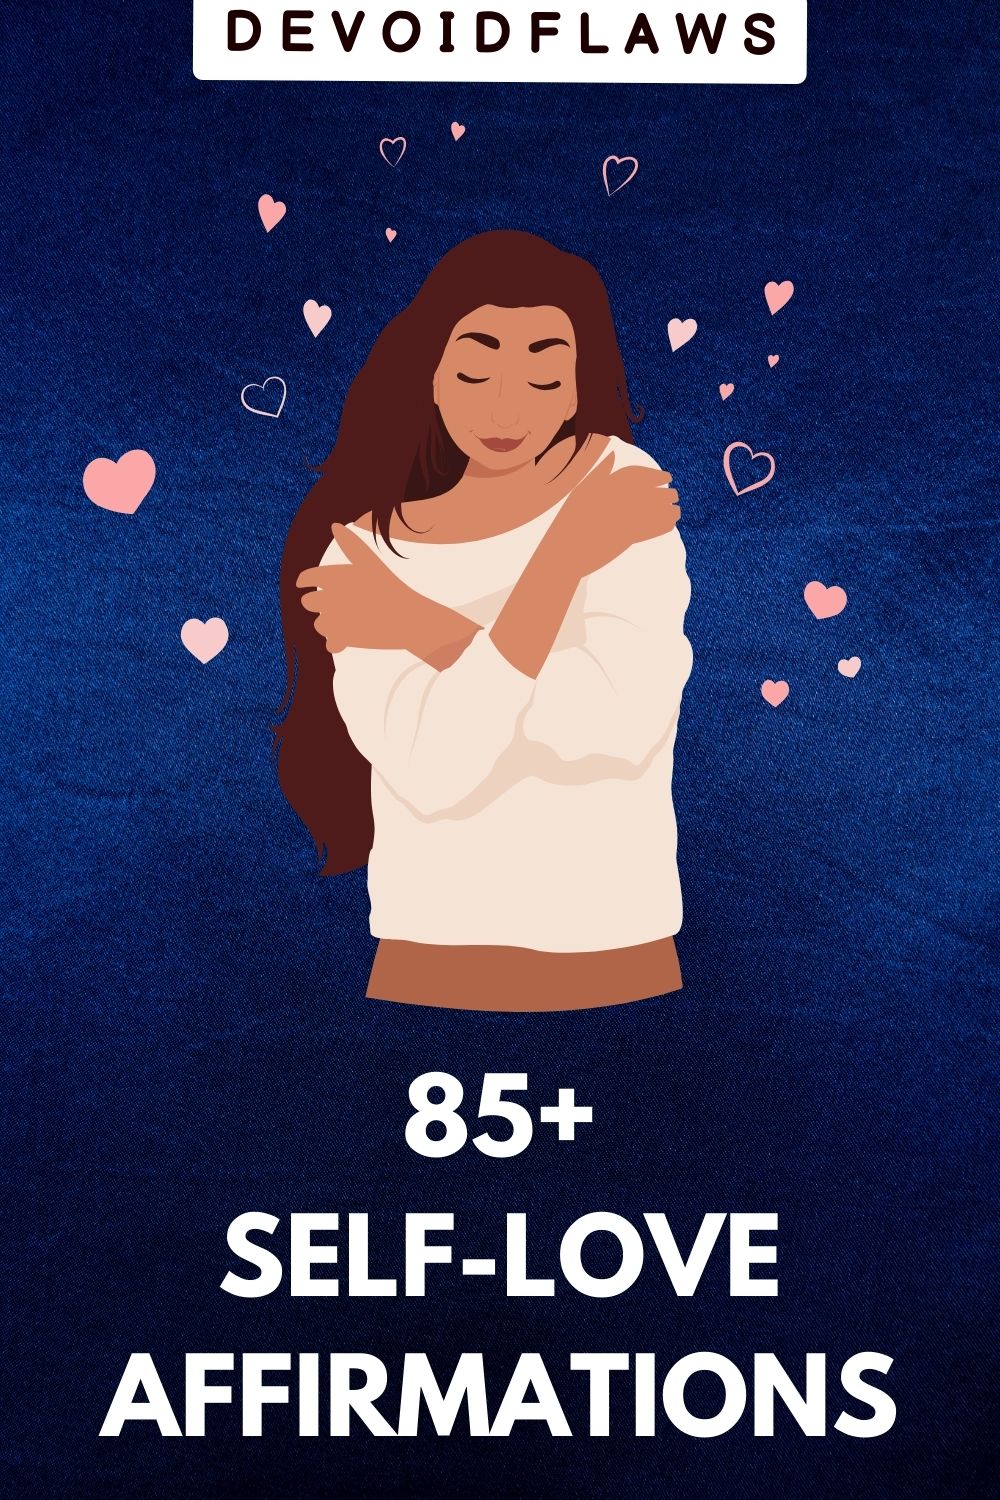 85 self-love affirmations